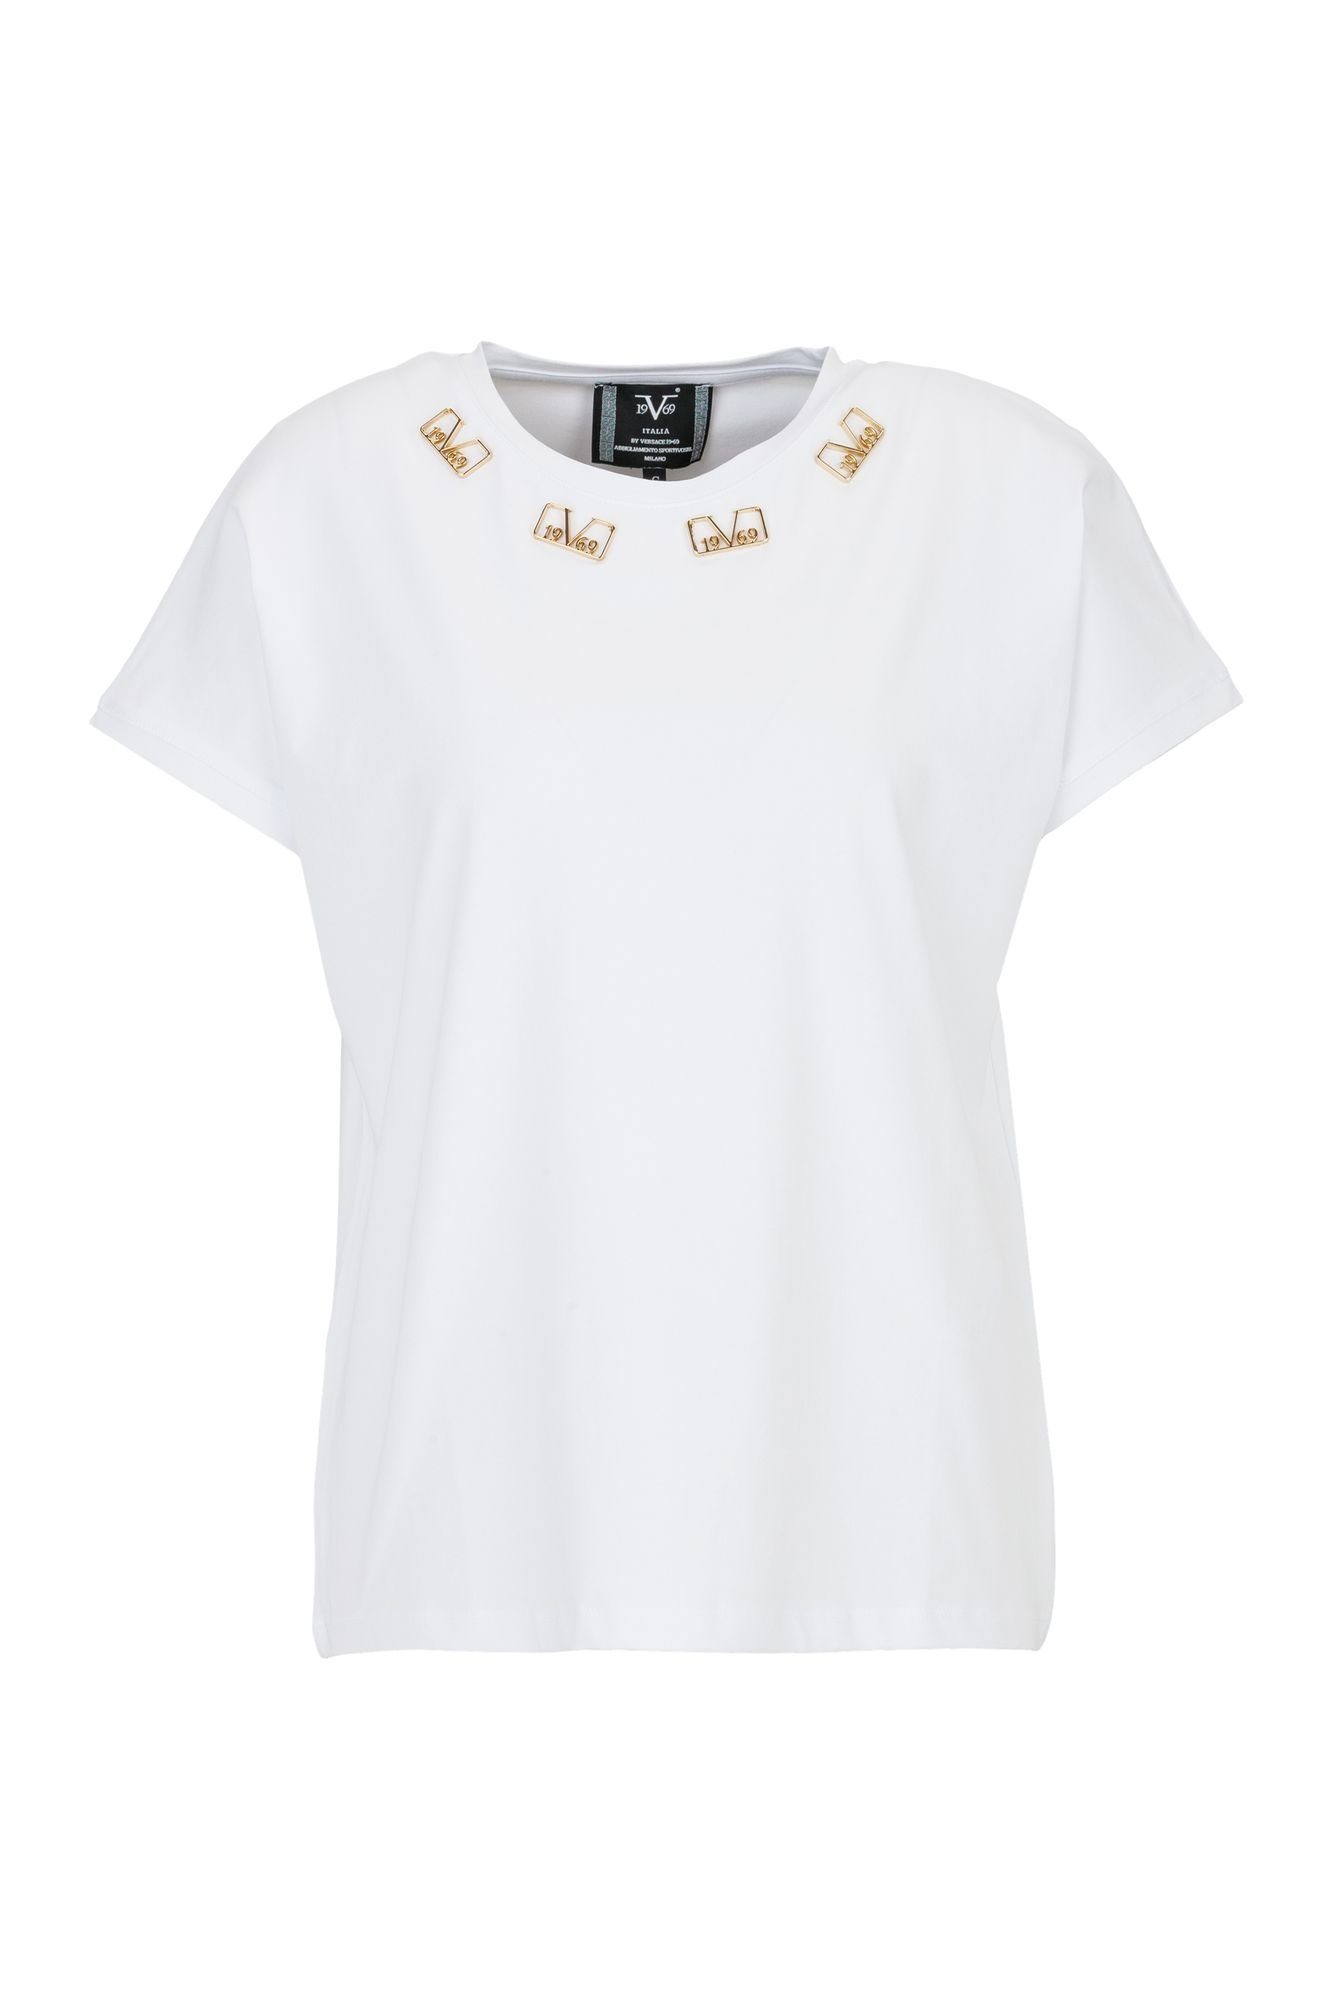 19V69 Italia by Versace T-Shirt California WHITE